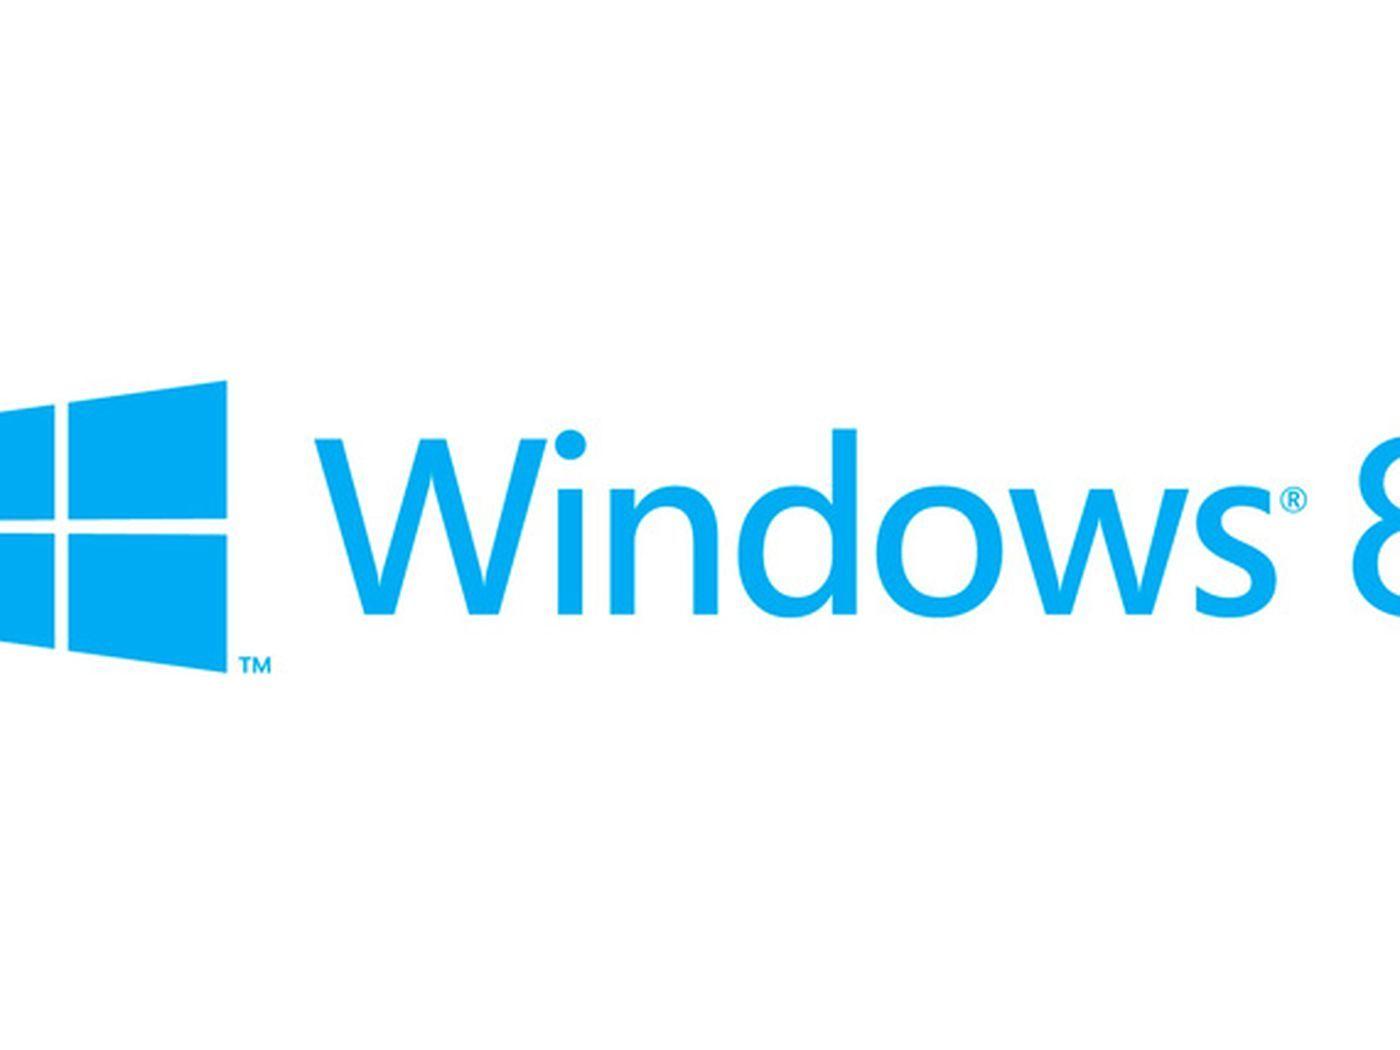 Windos Logo - Microsoft unveils new Metro style logo for Windows 8